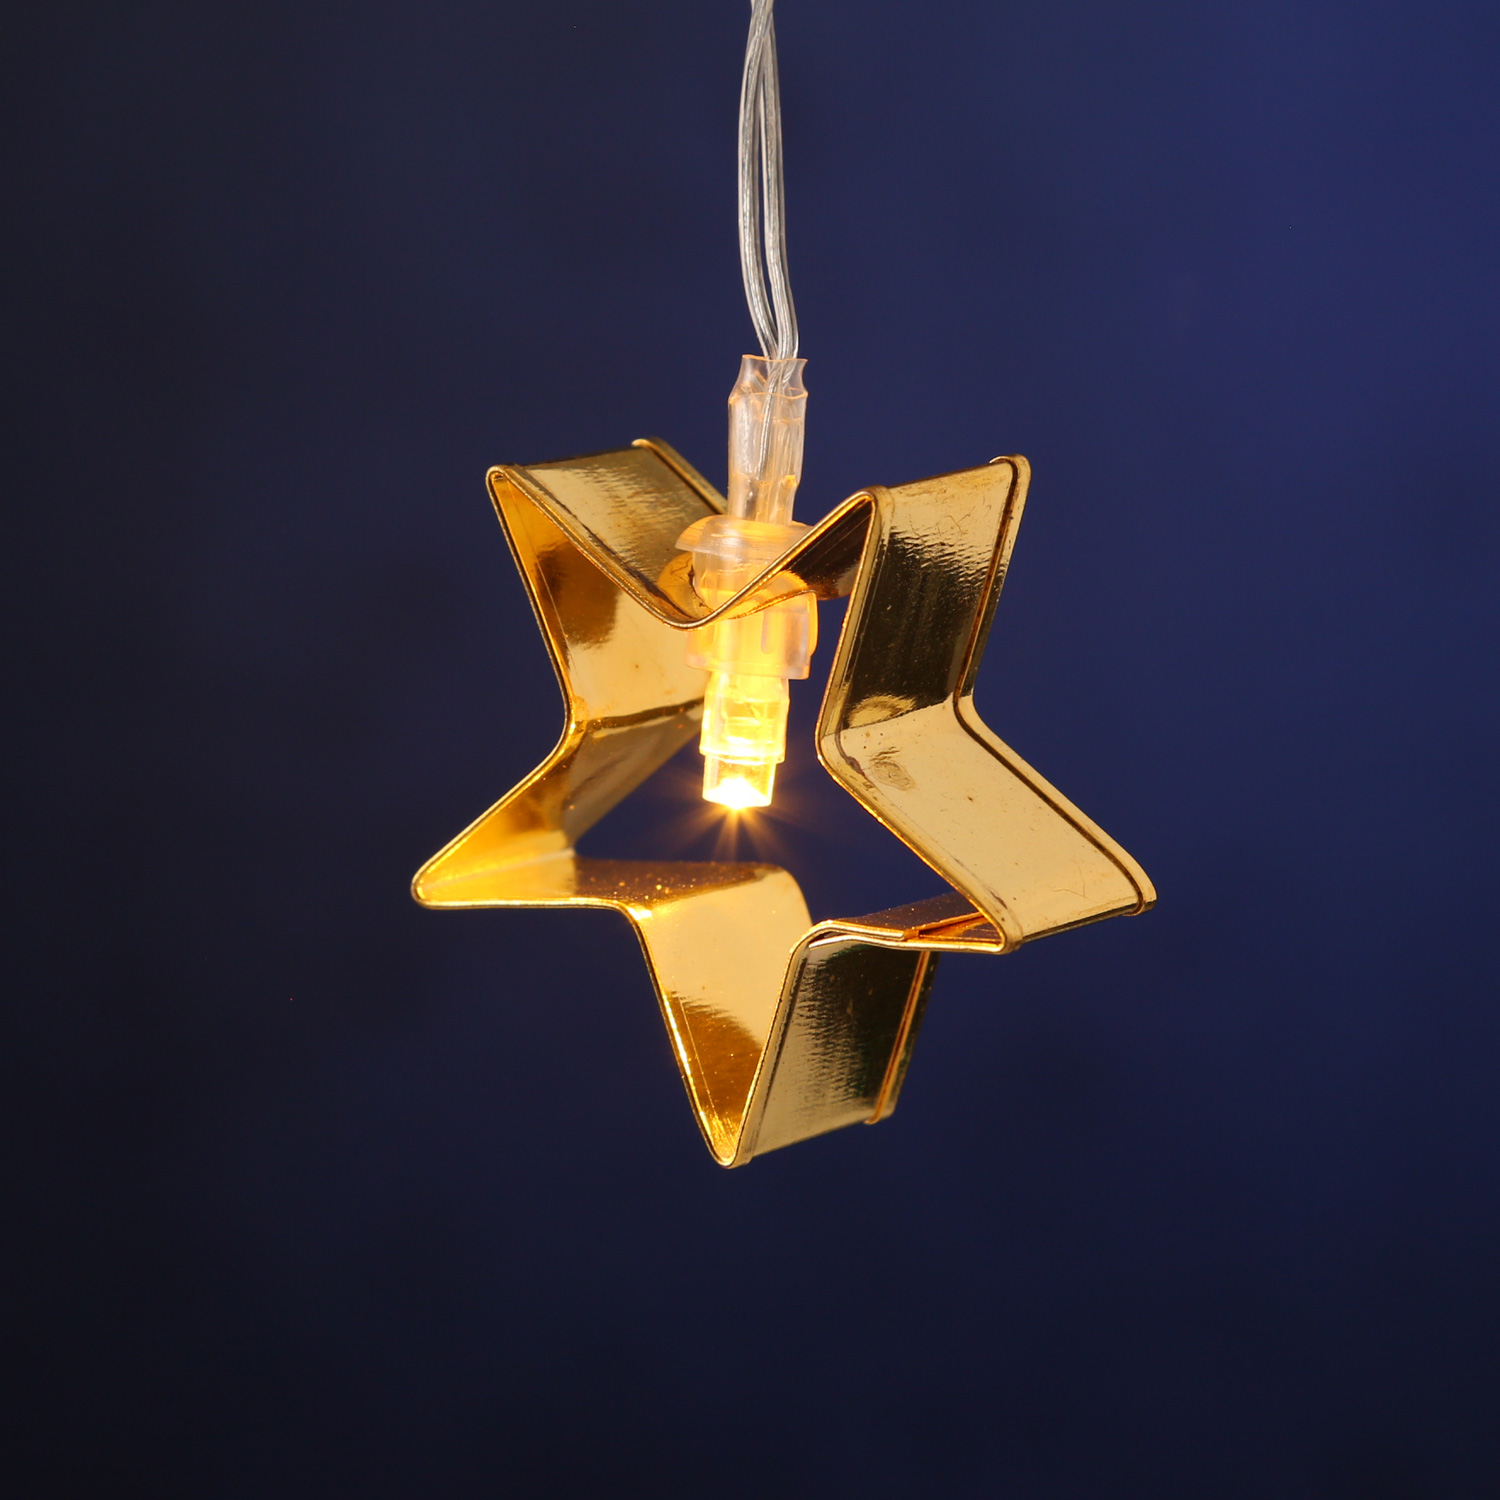 LED Lichterkette Backförmchen goldene Sterne - 8 warmweiße LED - Batteriebetrieb - L: 1,4m - gold